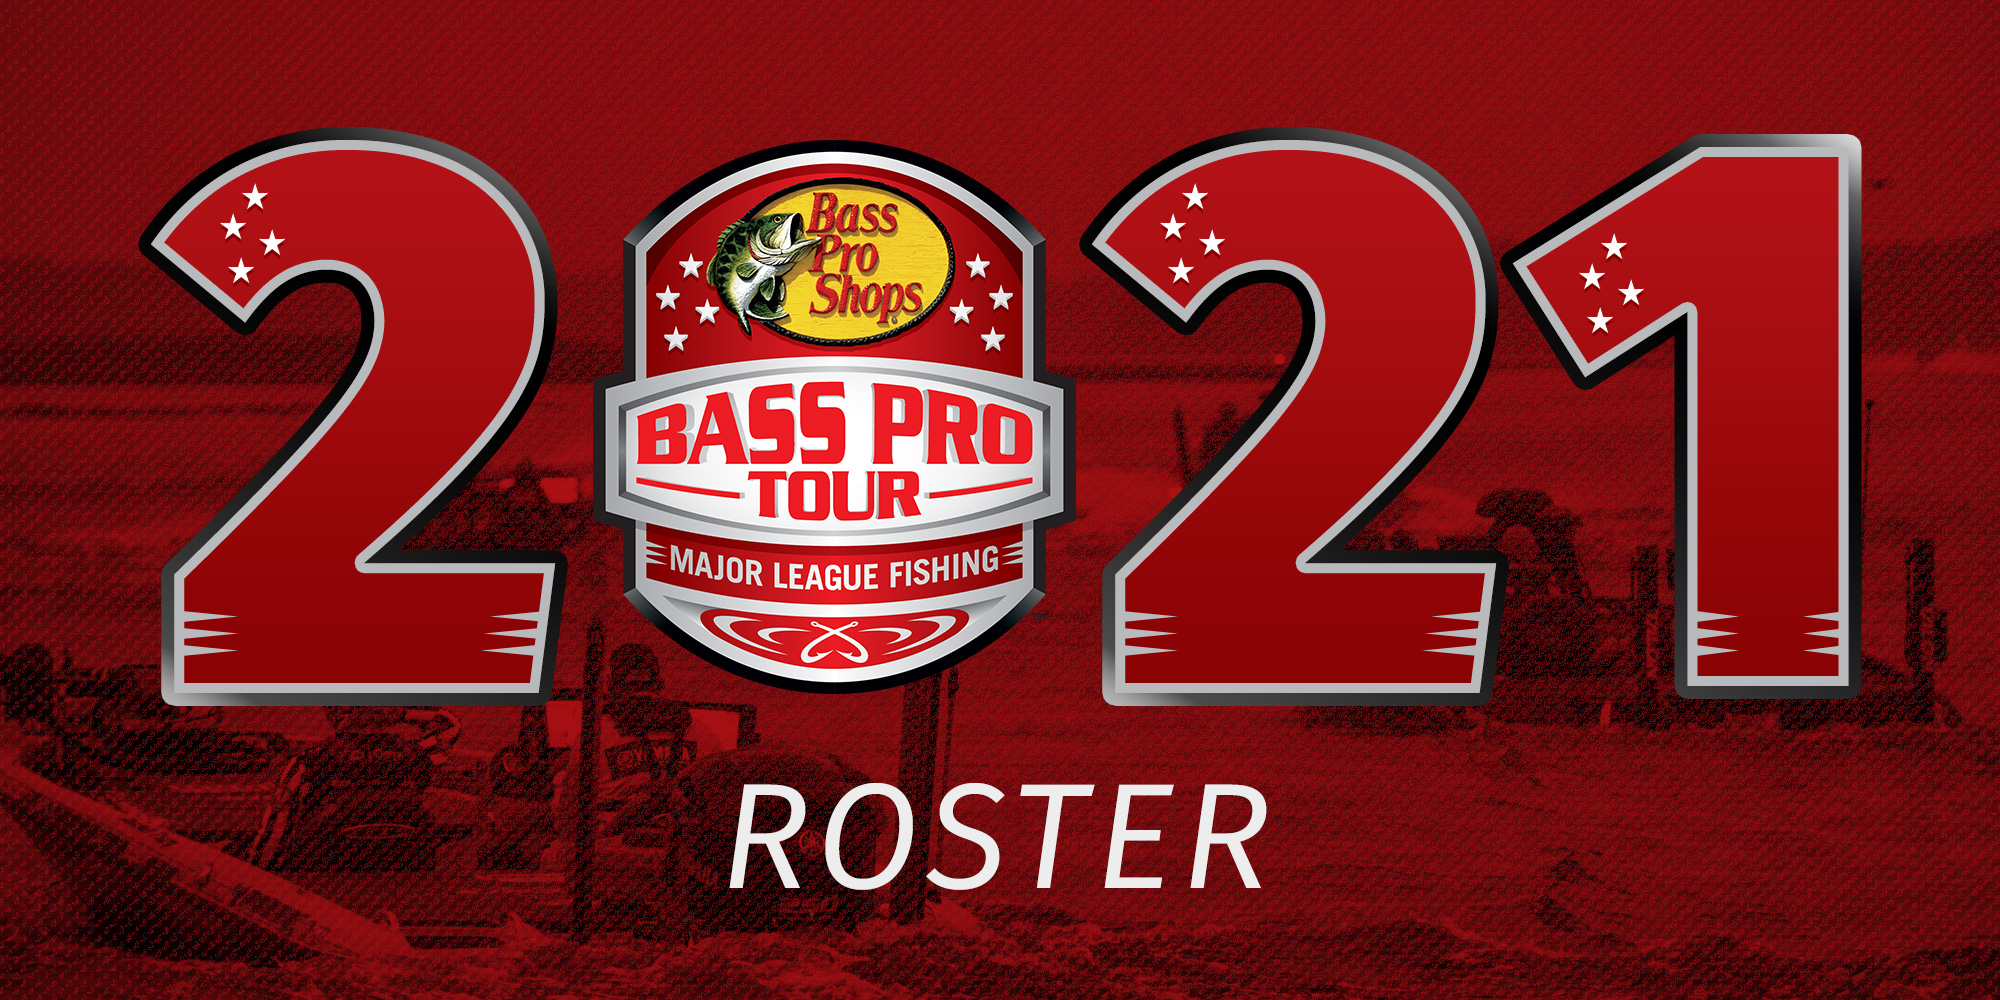 Bass Pro Major League Fishing : Major League Fishing's Bass Pro Tour Creates Uncertainty ... : Stage five championship round 21h • bass pro tour.